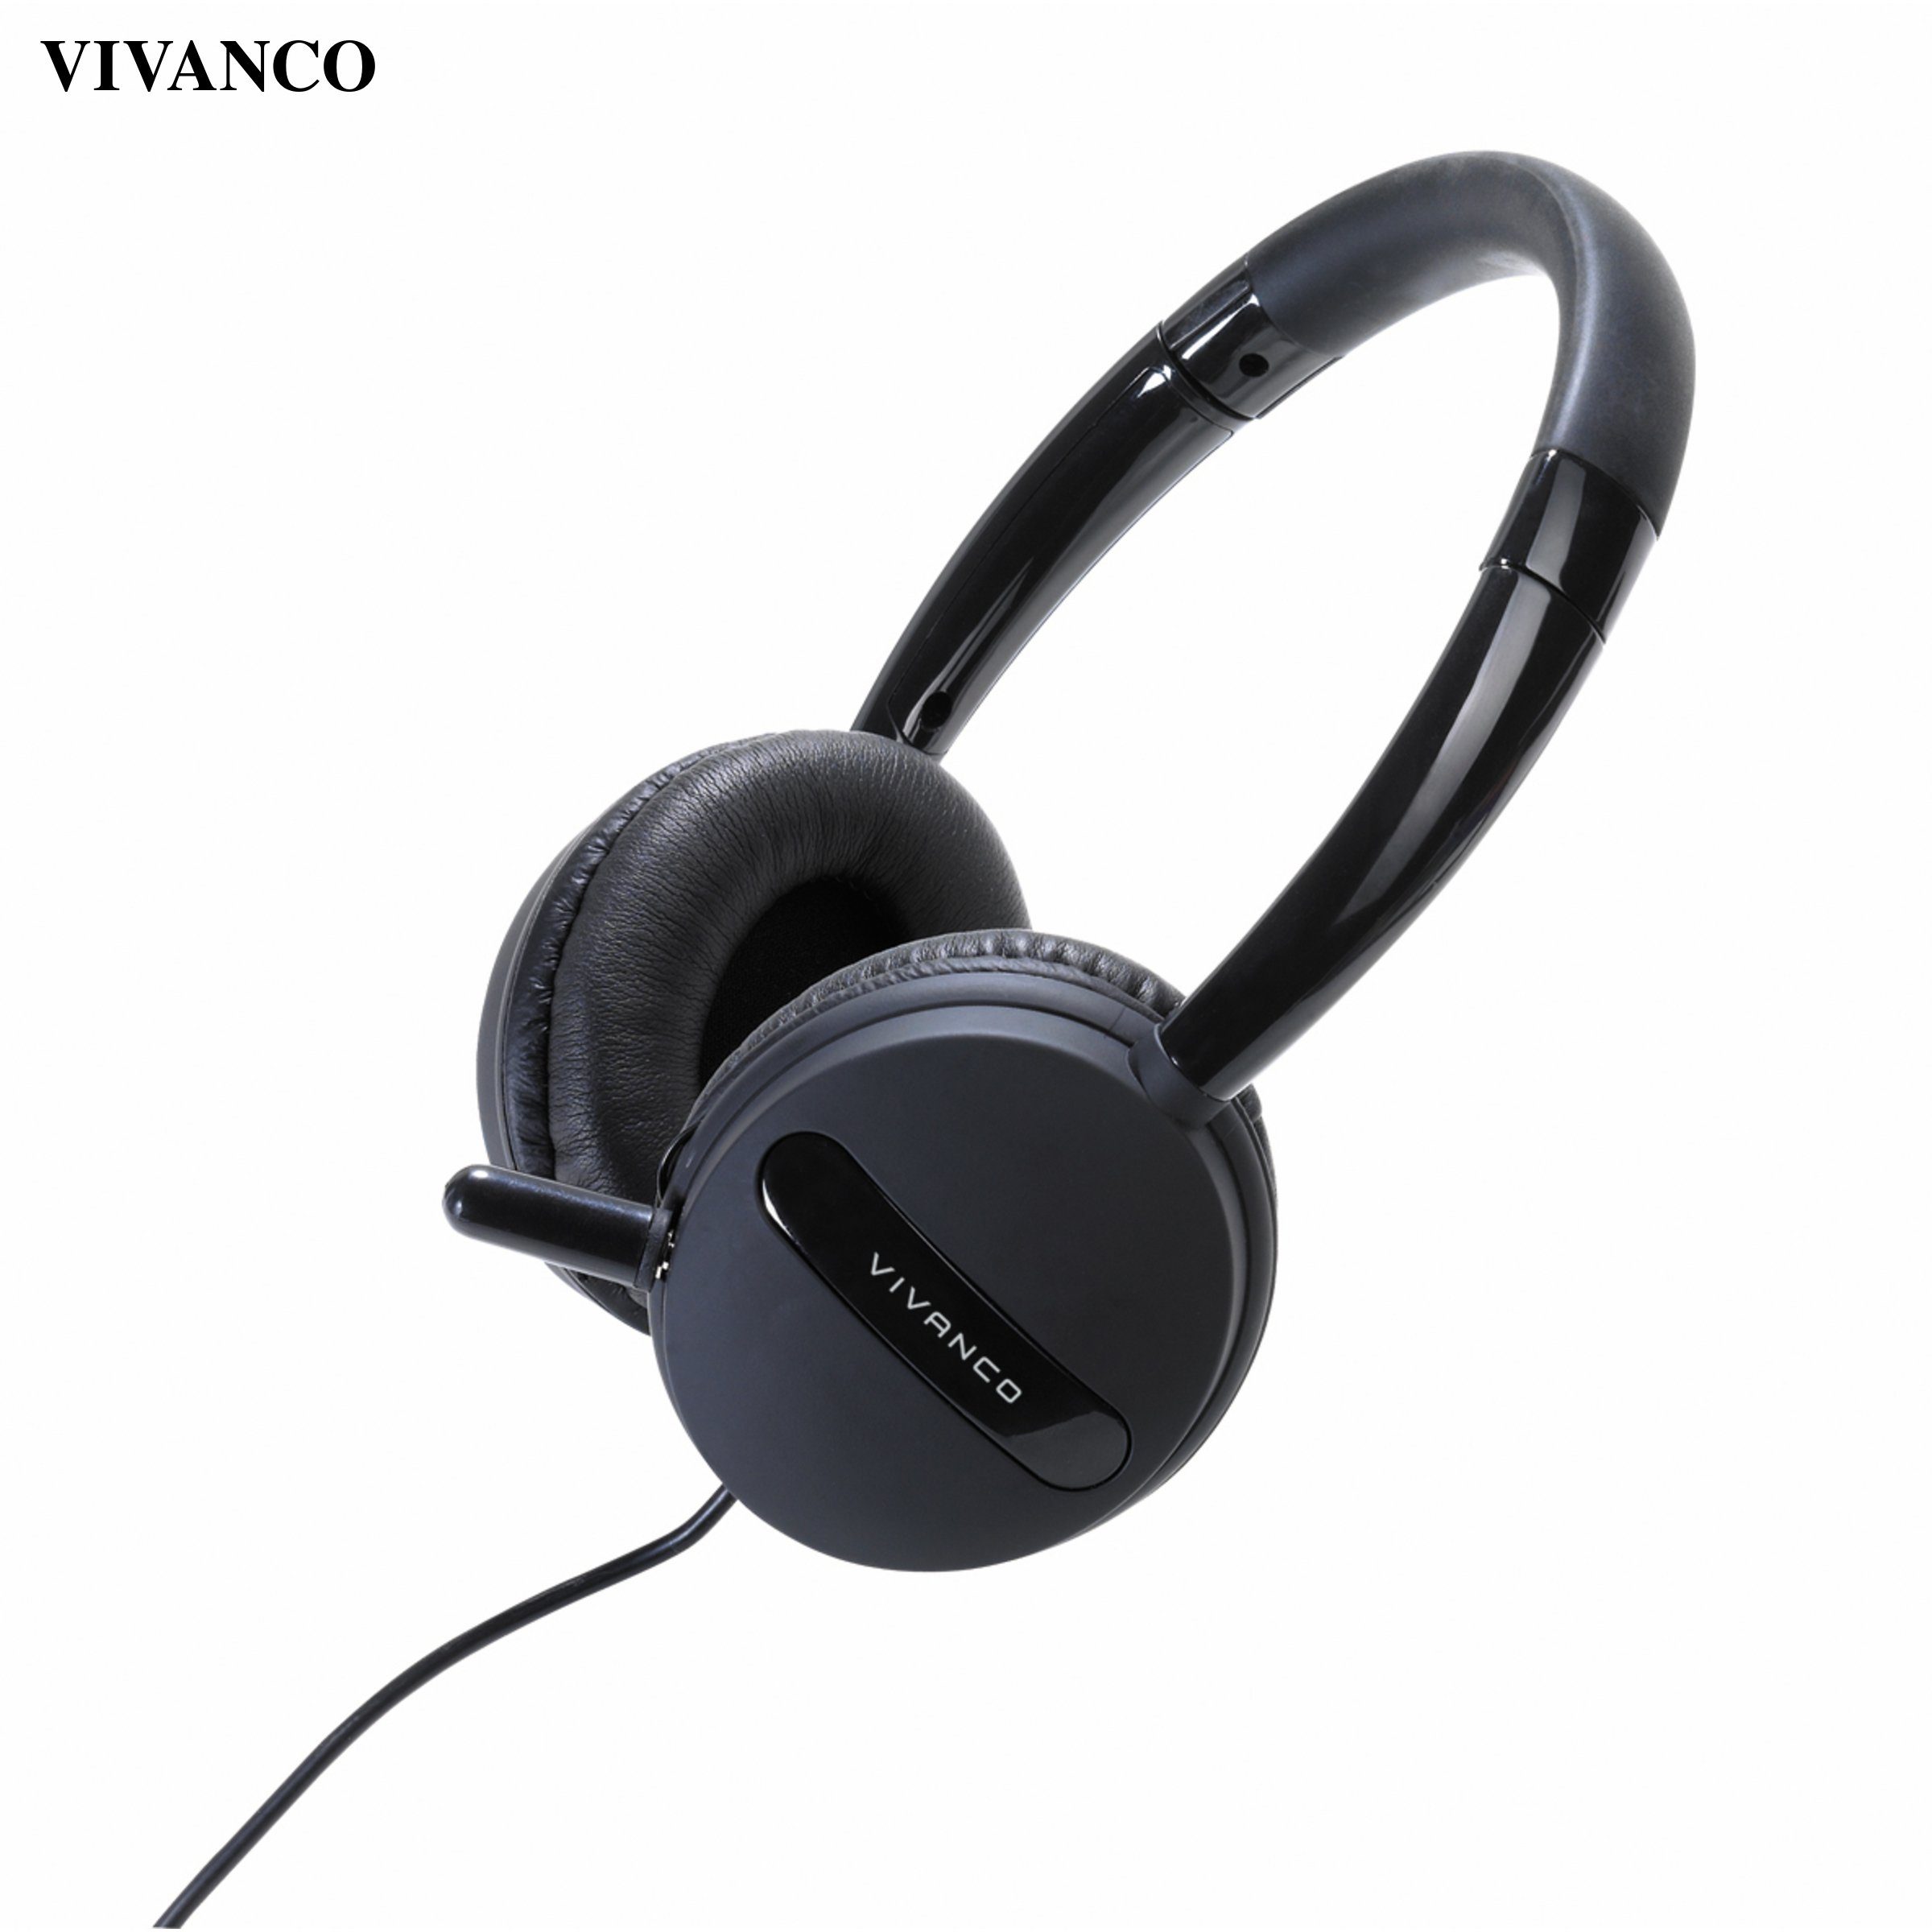 Vivanco (Anruffunktion) Kopfhörer